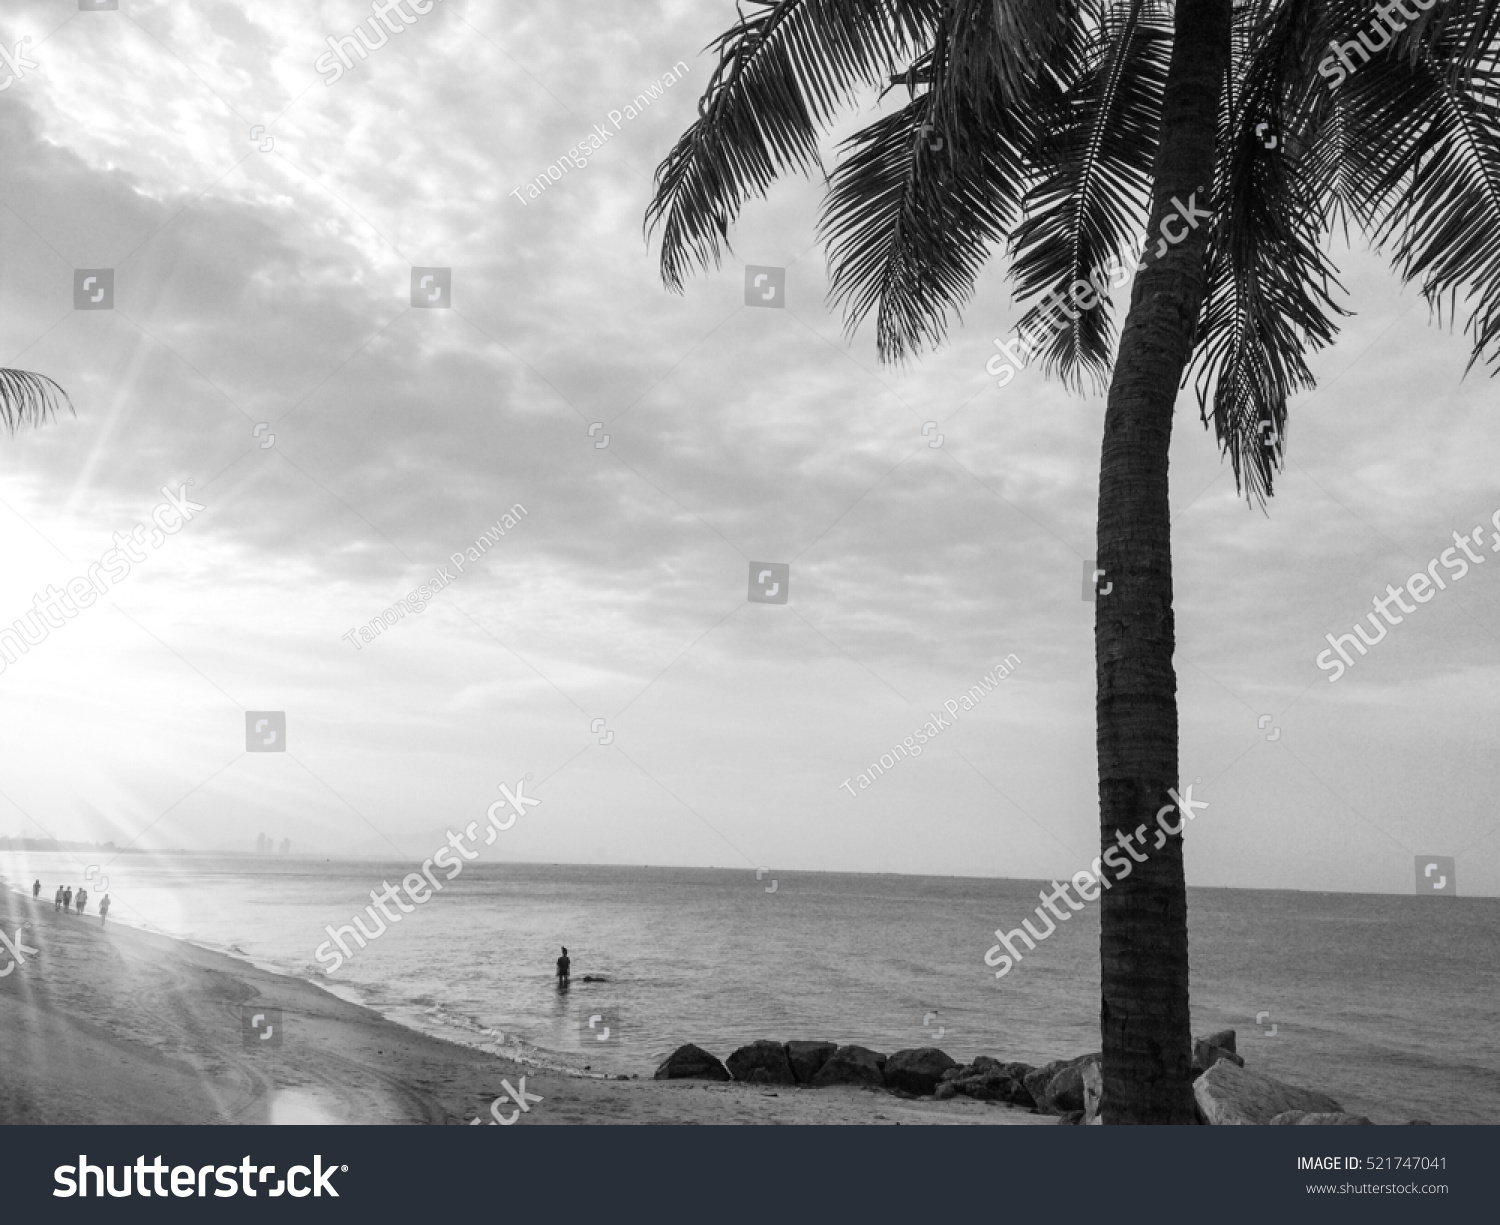 Beach Black White Focuslandscape Stock Photo 521747041 | Shutterstock